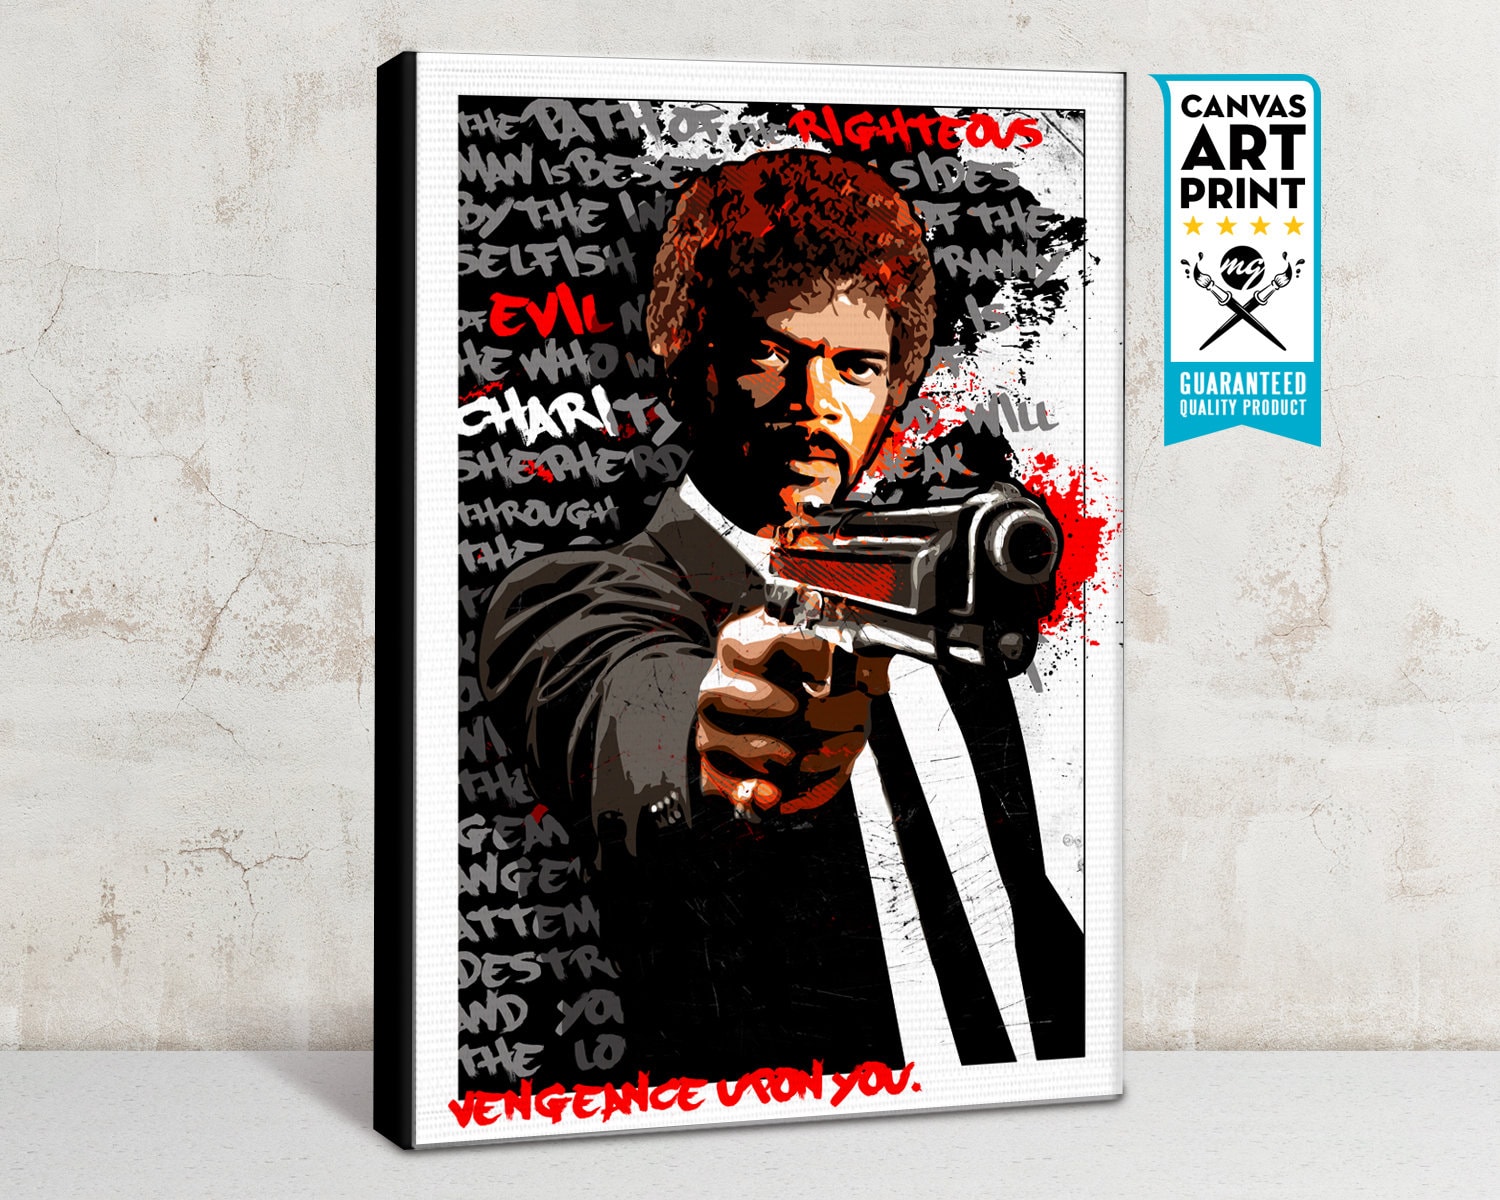 Buy Art For Less FRAMED Pulp Fiction JULES WINNFIELD 36x24 MOVIE Art Print  Poster Quentin Tarantino Movies